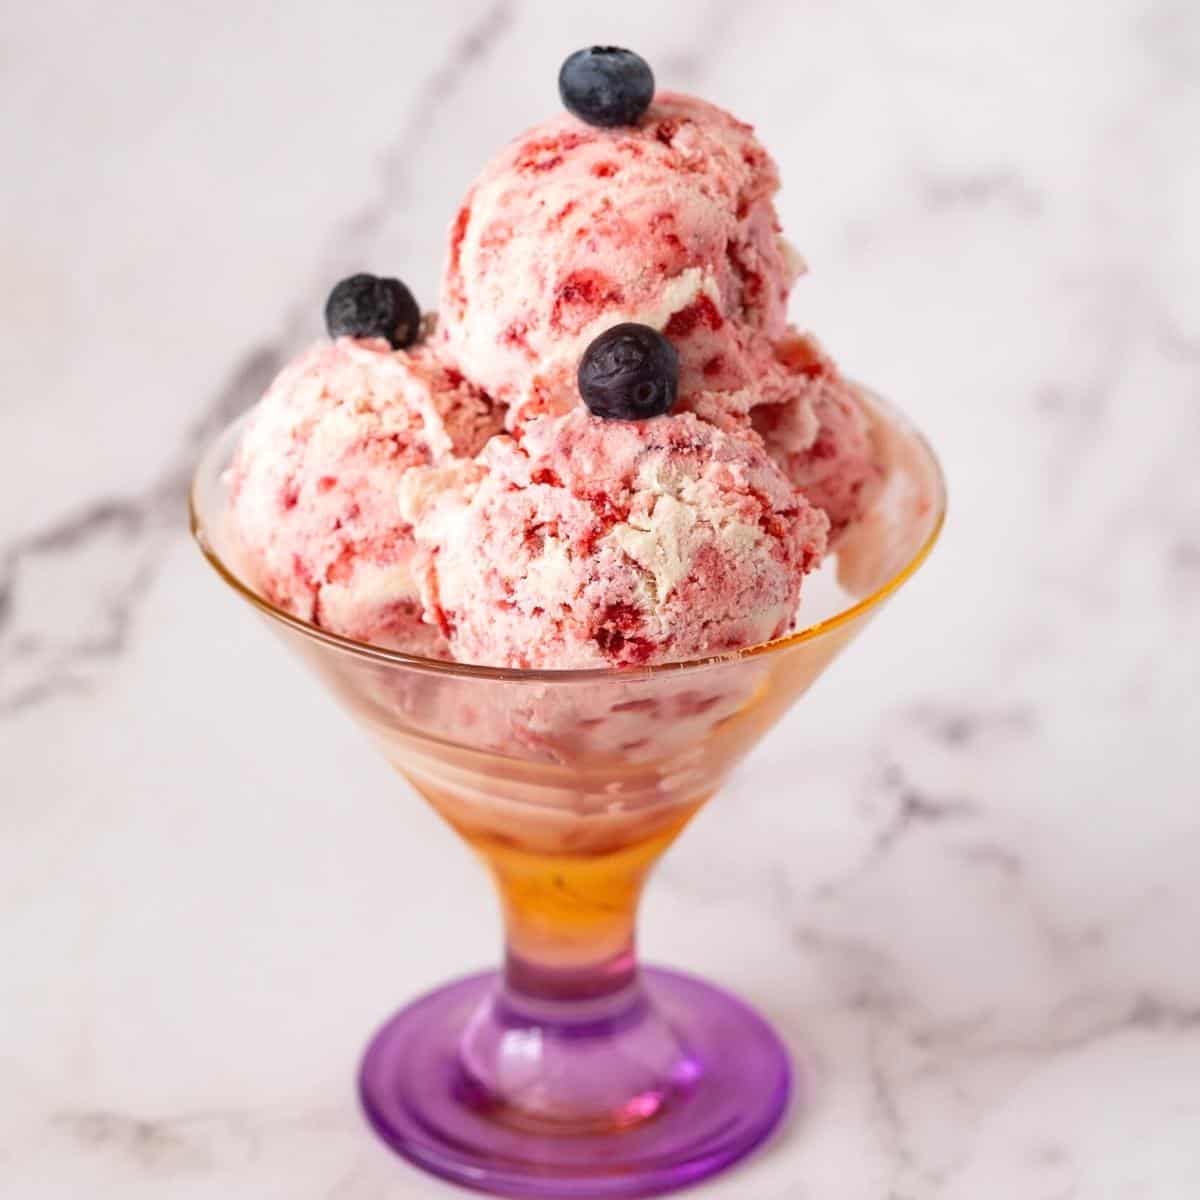 A ice cream dessert glass with strawberry.